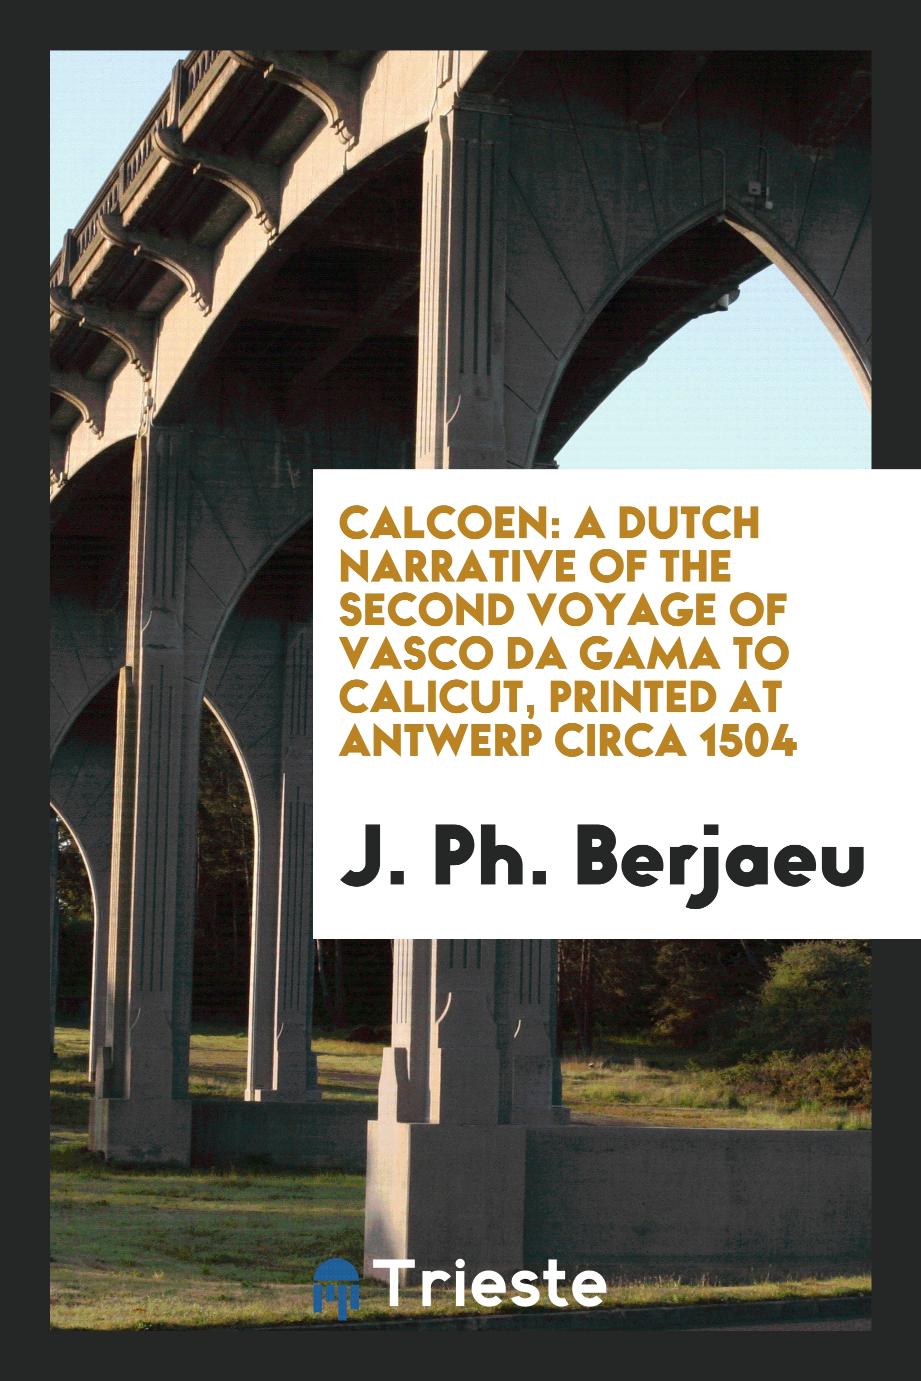 Calcoen: a Dutch narrative of the second voyage of Vasco da Gama to Calicut, printed at Antwerp circa 1504